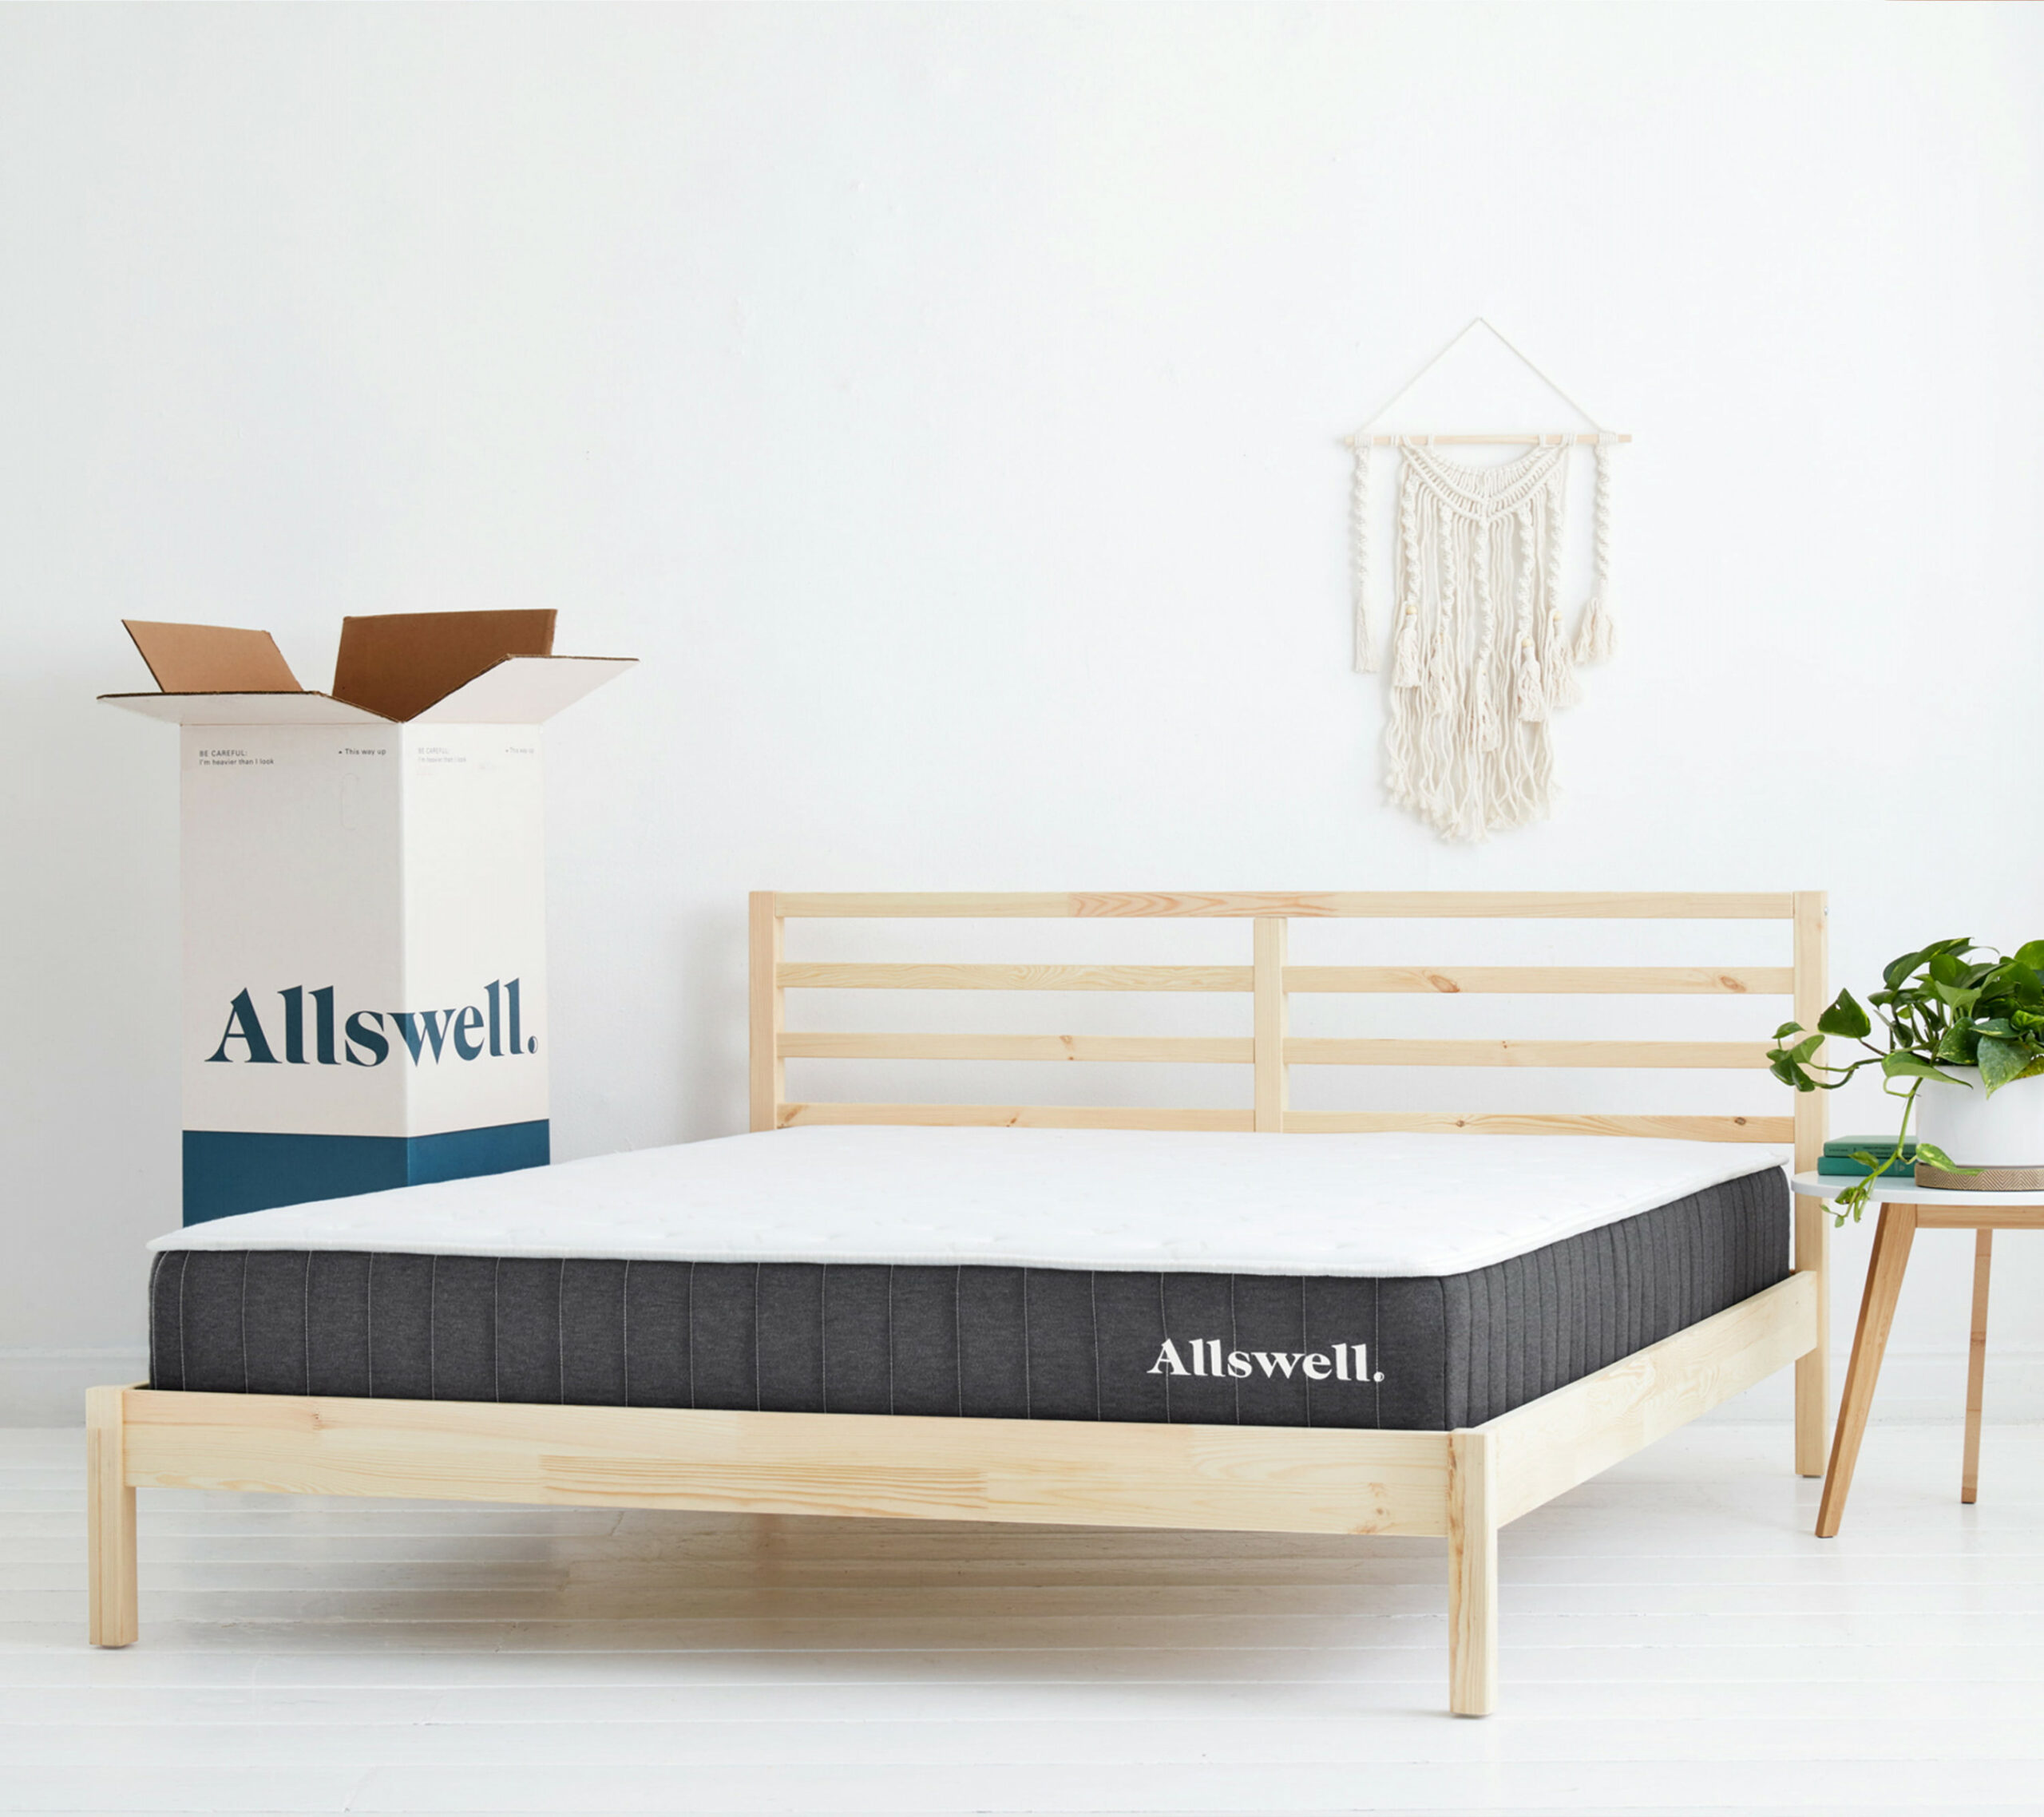 The Allswell " Bed in a Box Hybrid Mattress, Full - Walmart